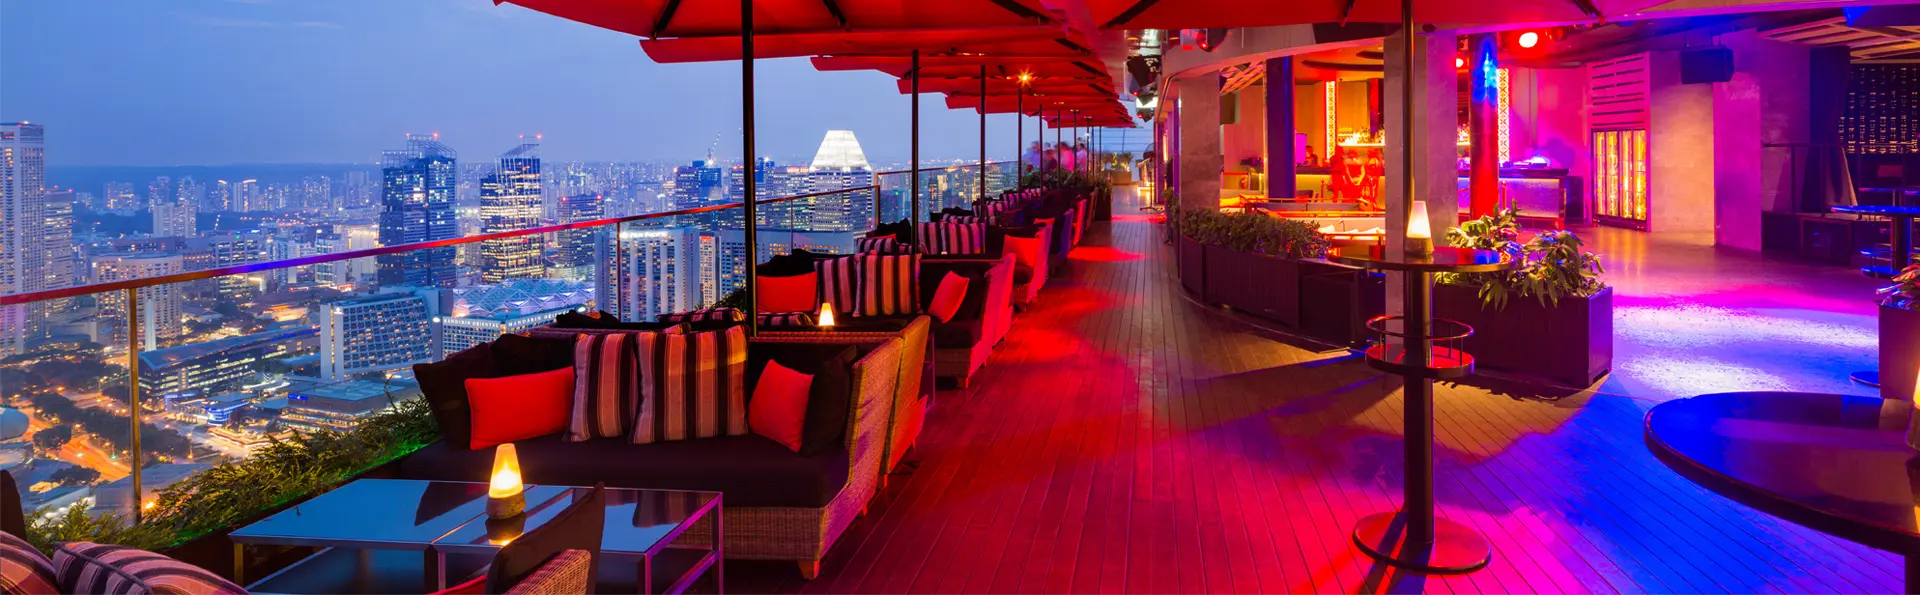 Hotel review Restaurants & Bars' - Marina Bay Sands - 1